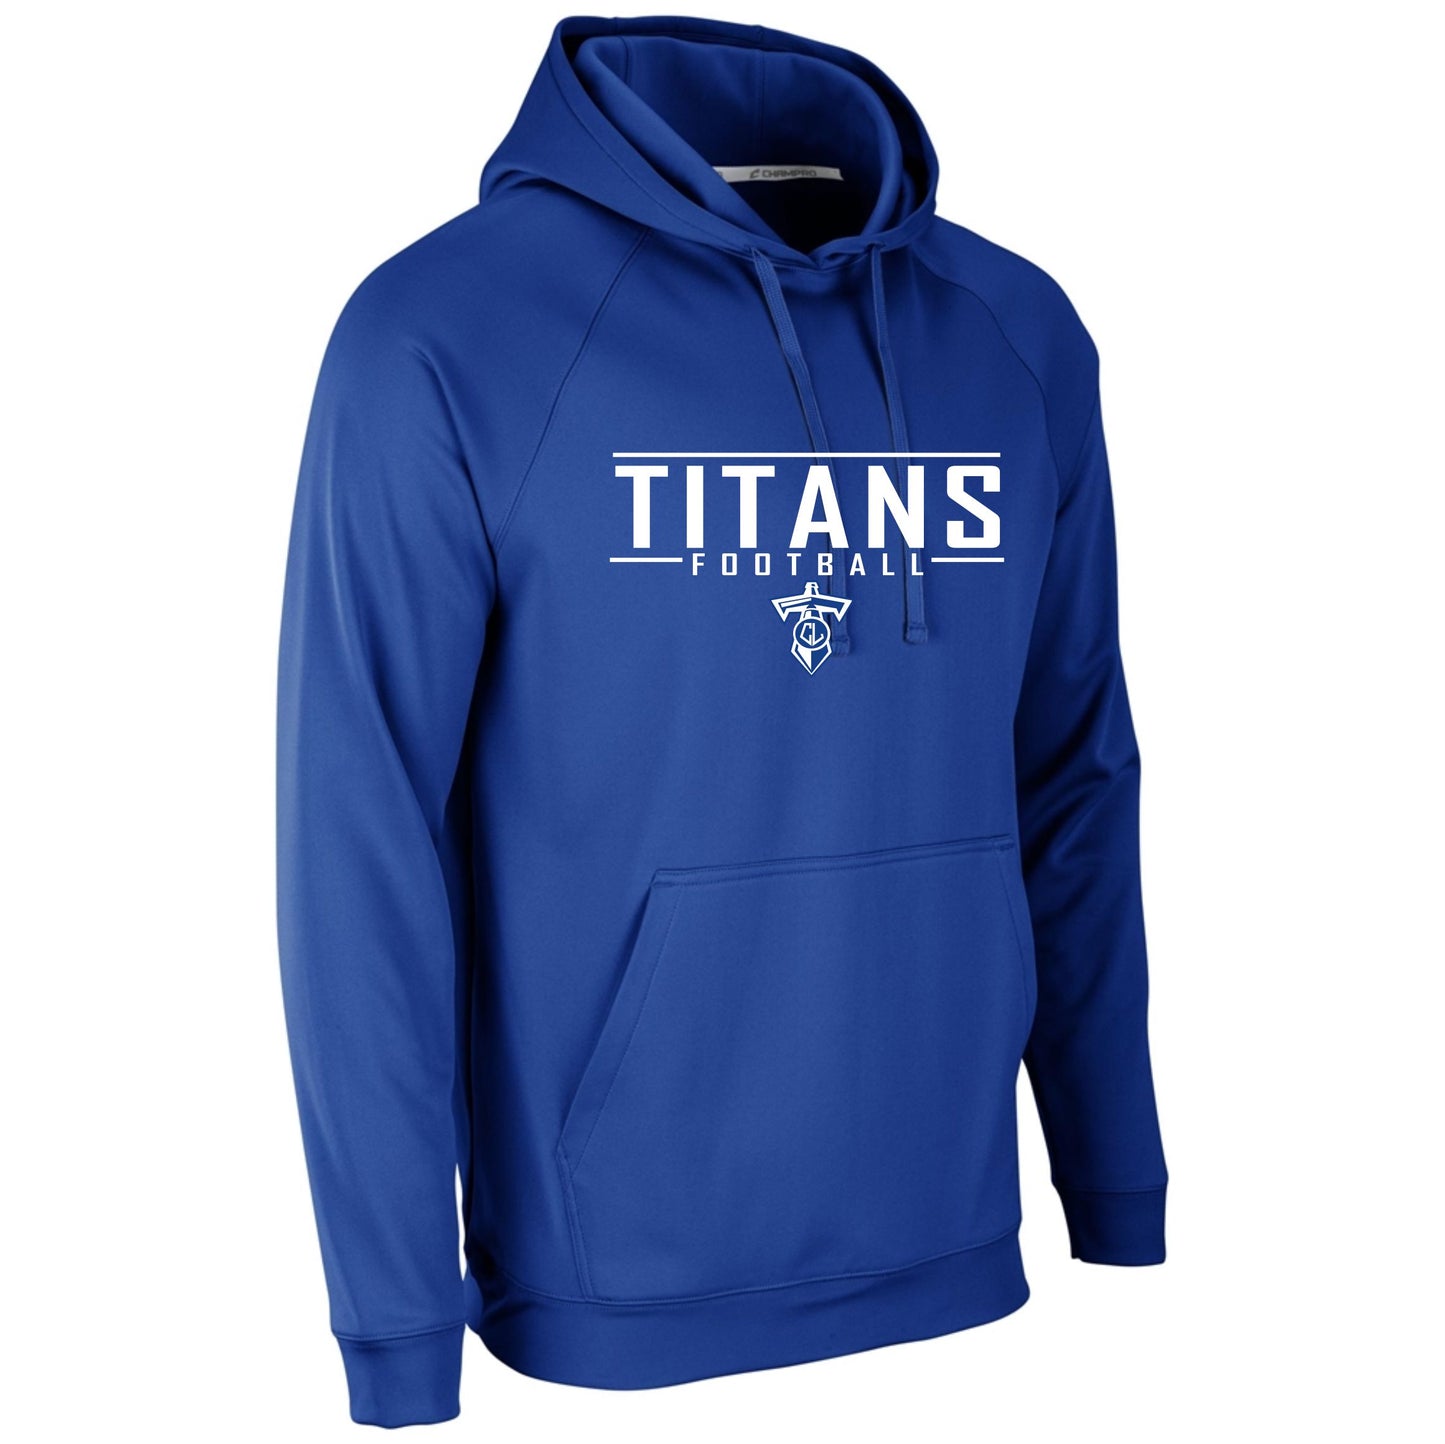 Titans Football - Outerwear